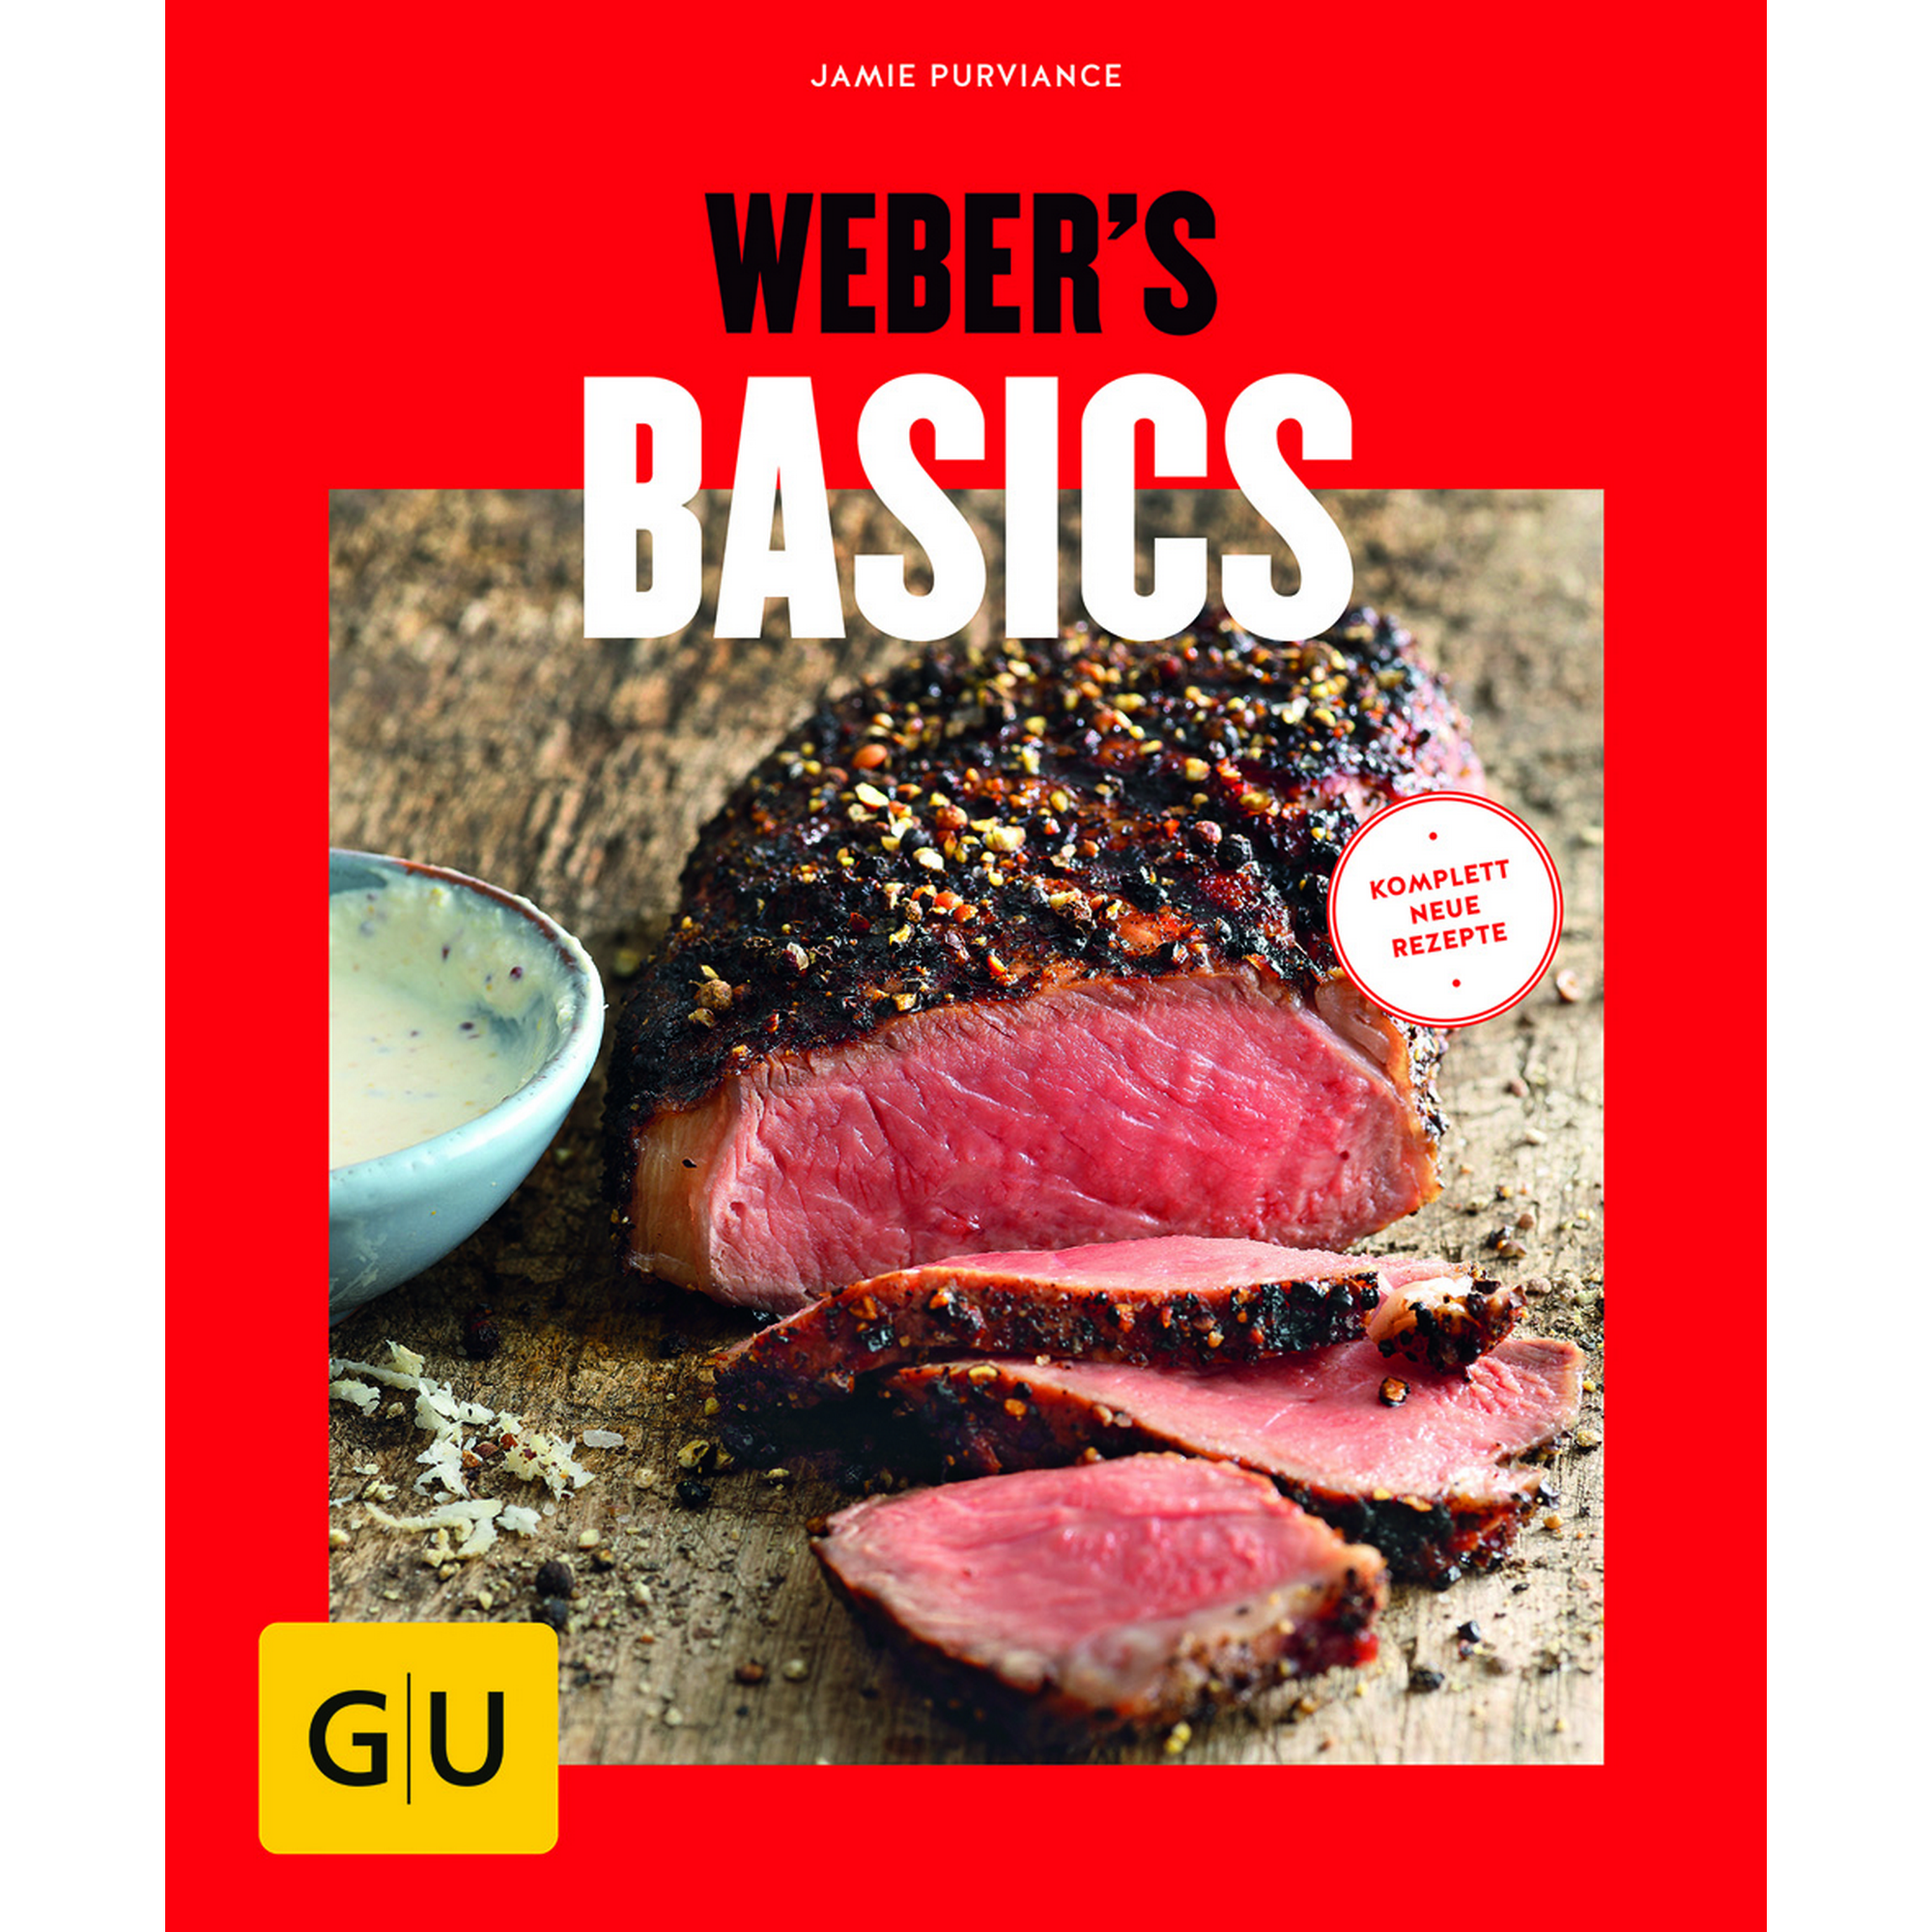 Grillbuch Jamie Purviance 'Weber's Basics' + product picture